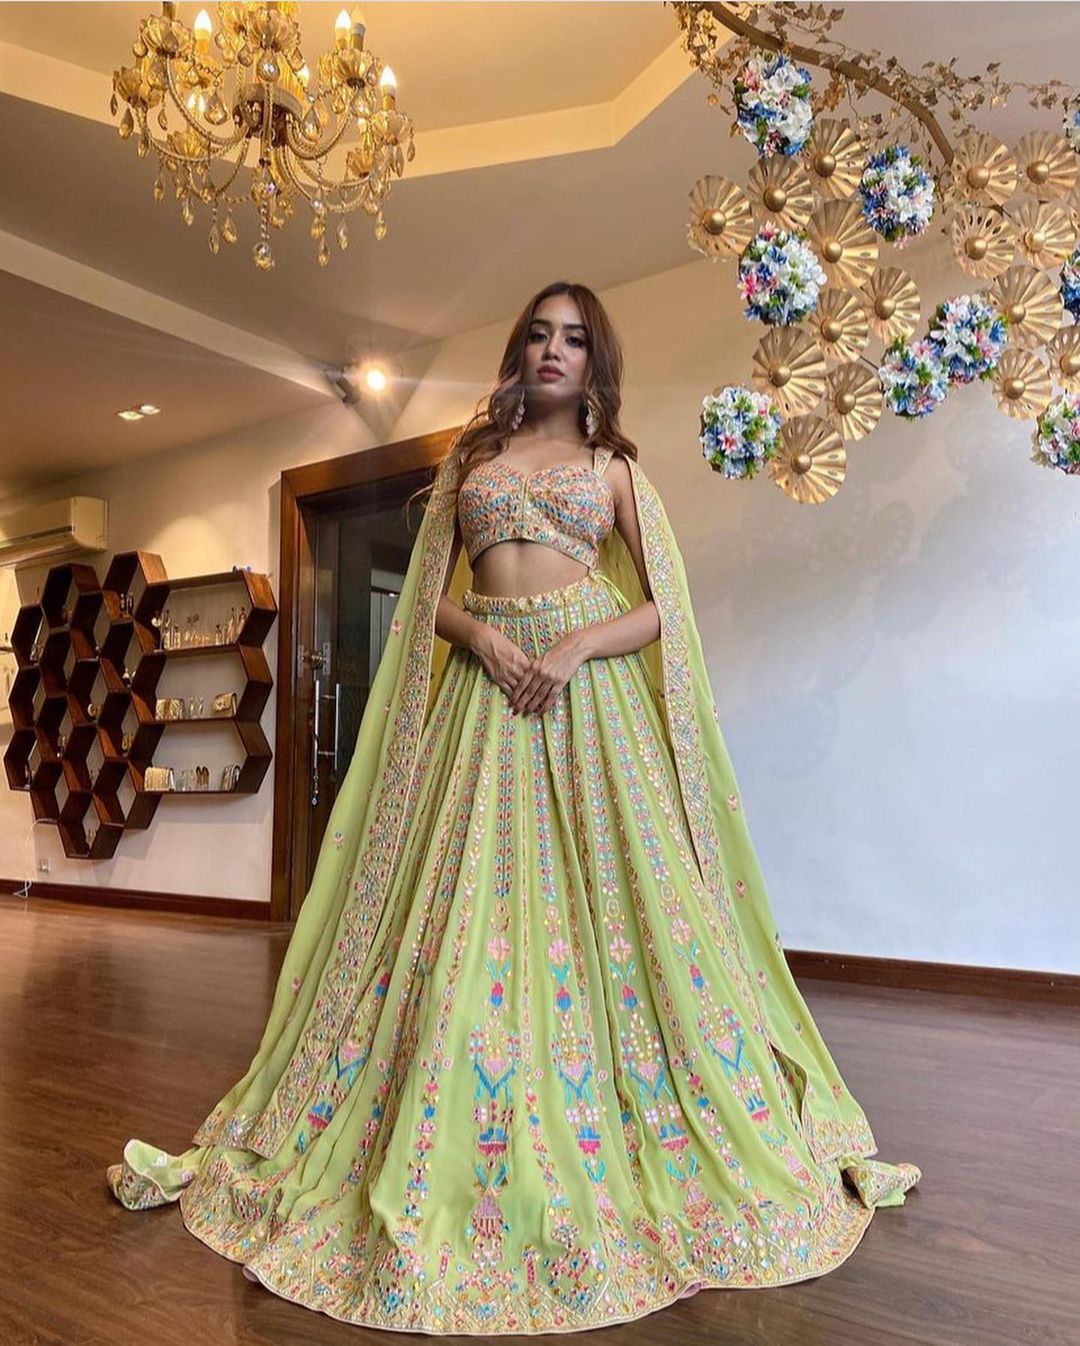 radha song lehenga | Saree dress, Lehenga, Saree designs